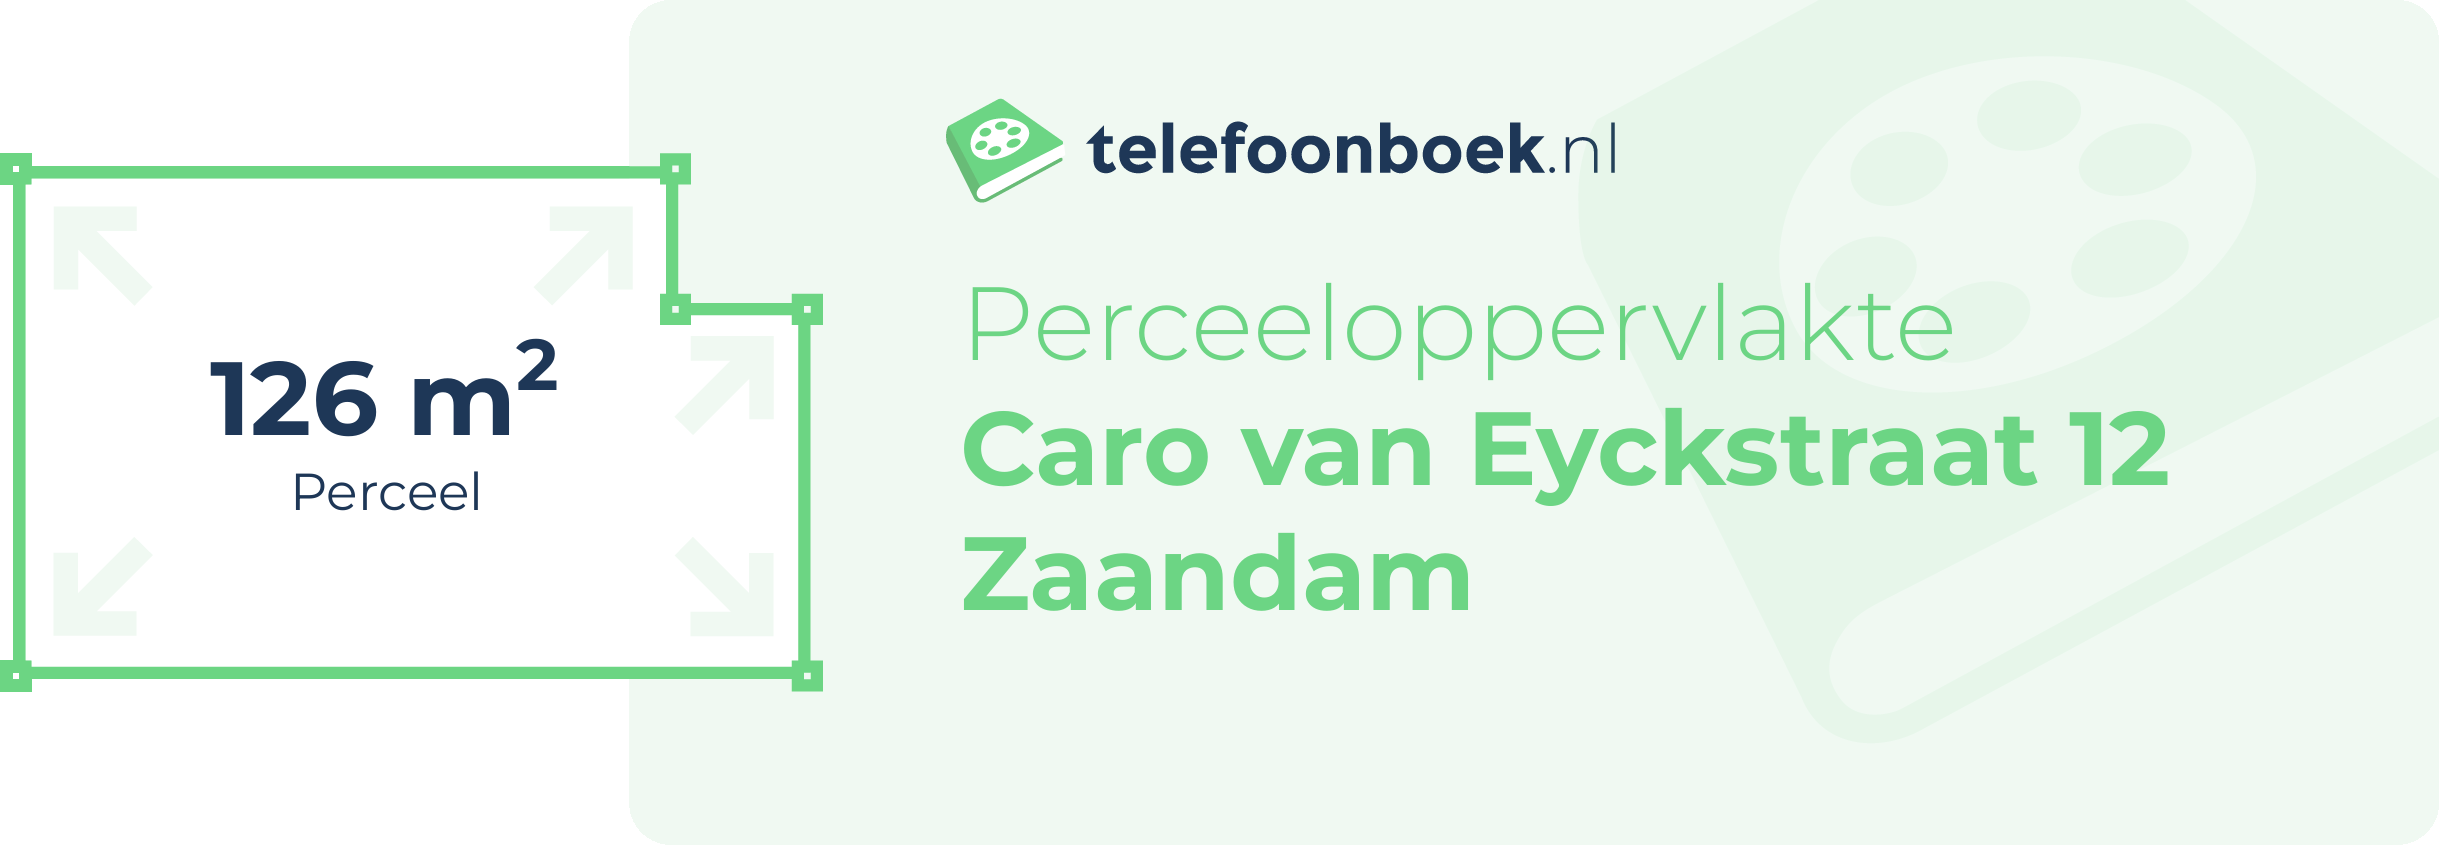 Perceeloppervlakte Caro Van Eyckstraat 12 Zaandam